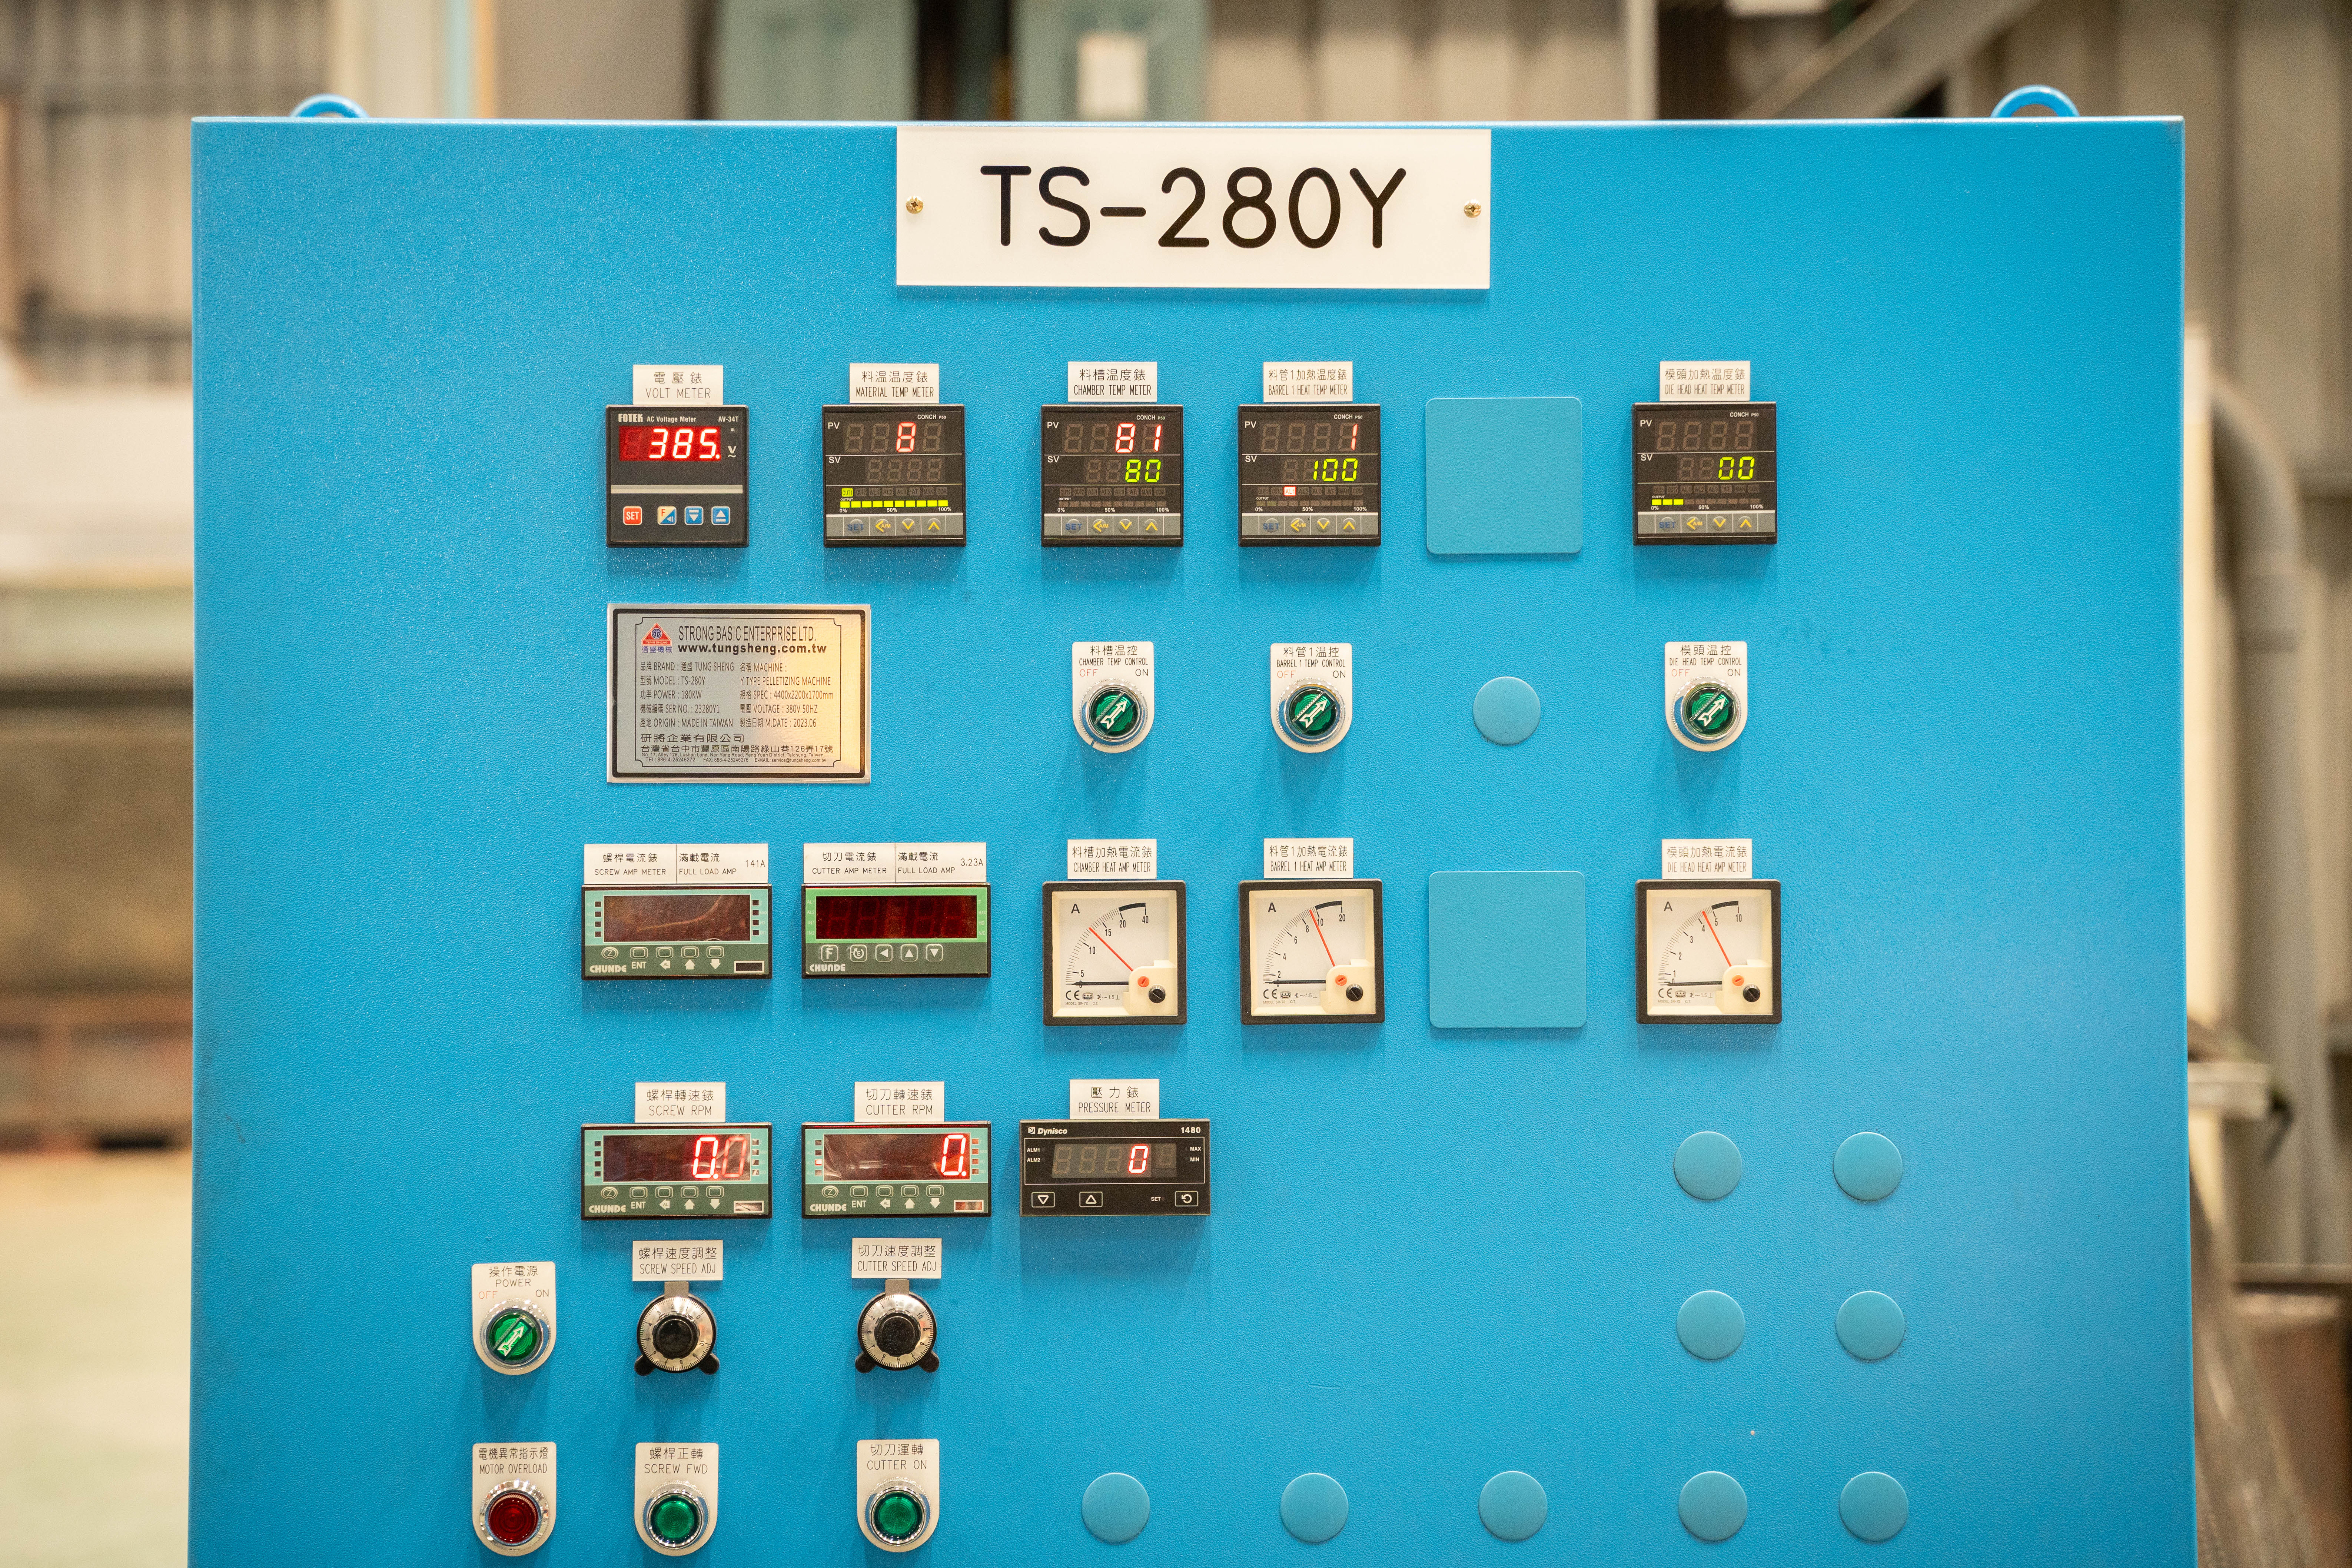 TS-280Y Power Control Pannel